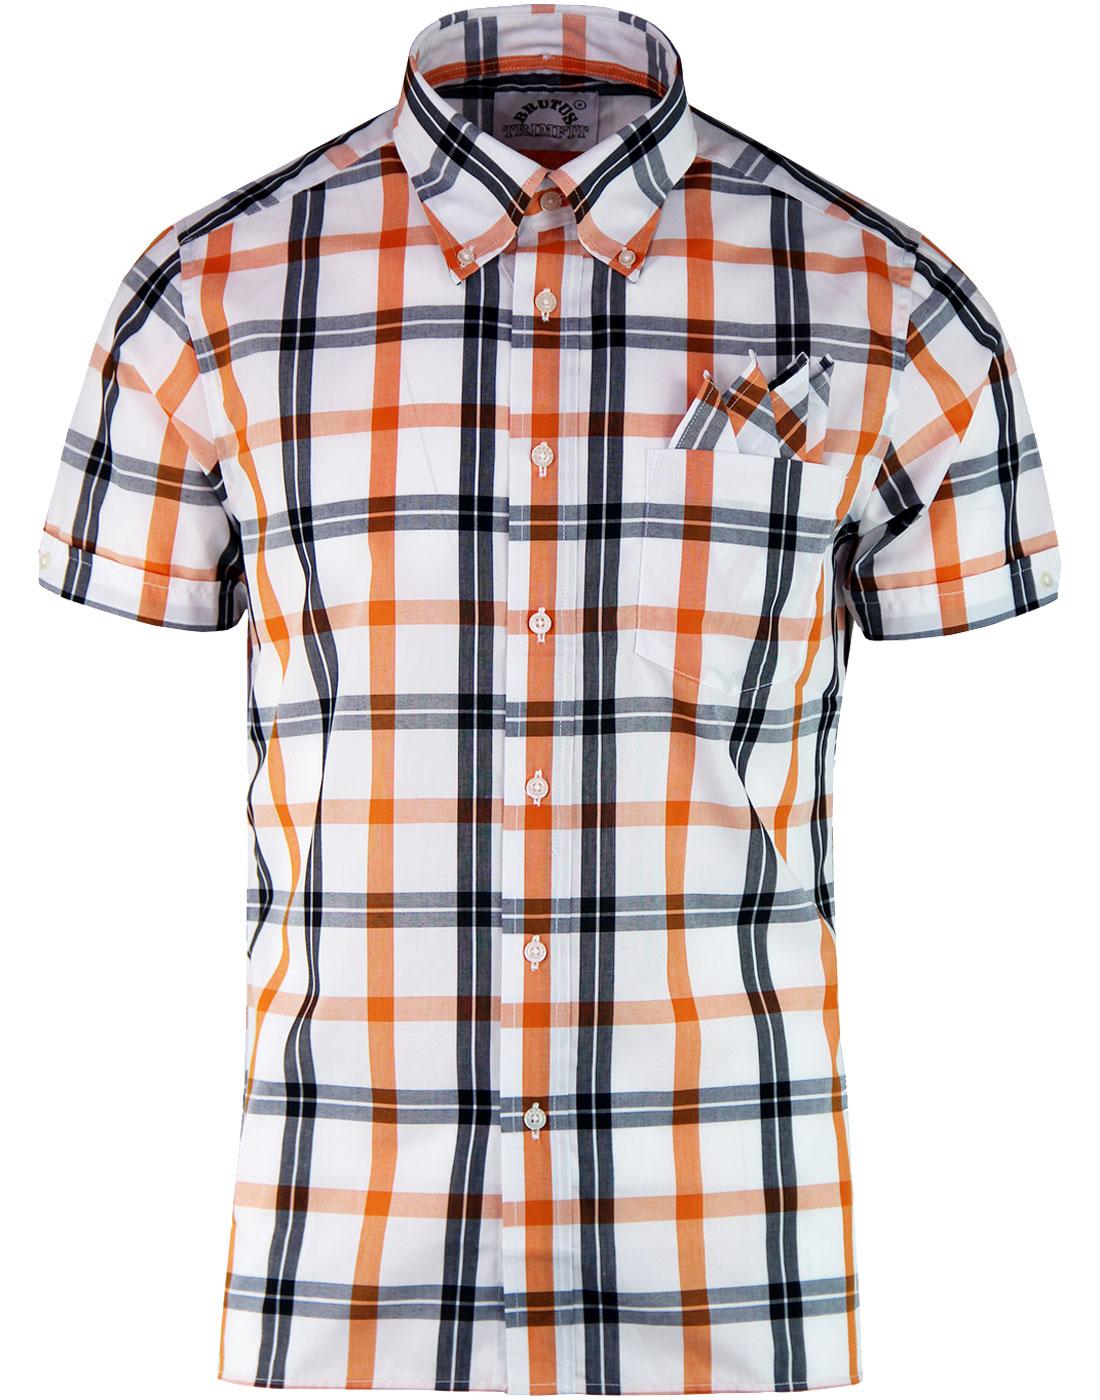 BRUTUS TRIMFIT Men's Window Pane Check Shirt in White & Orange